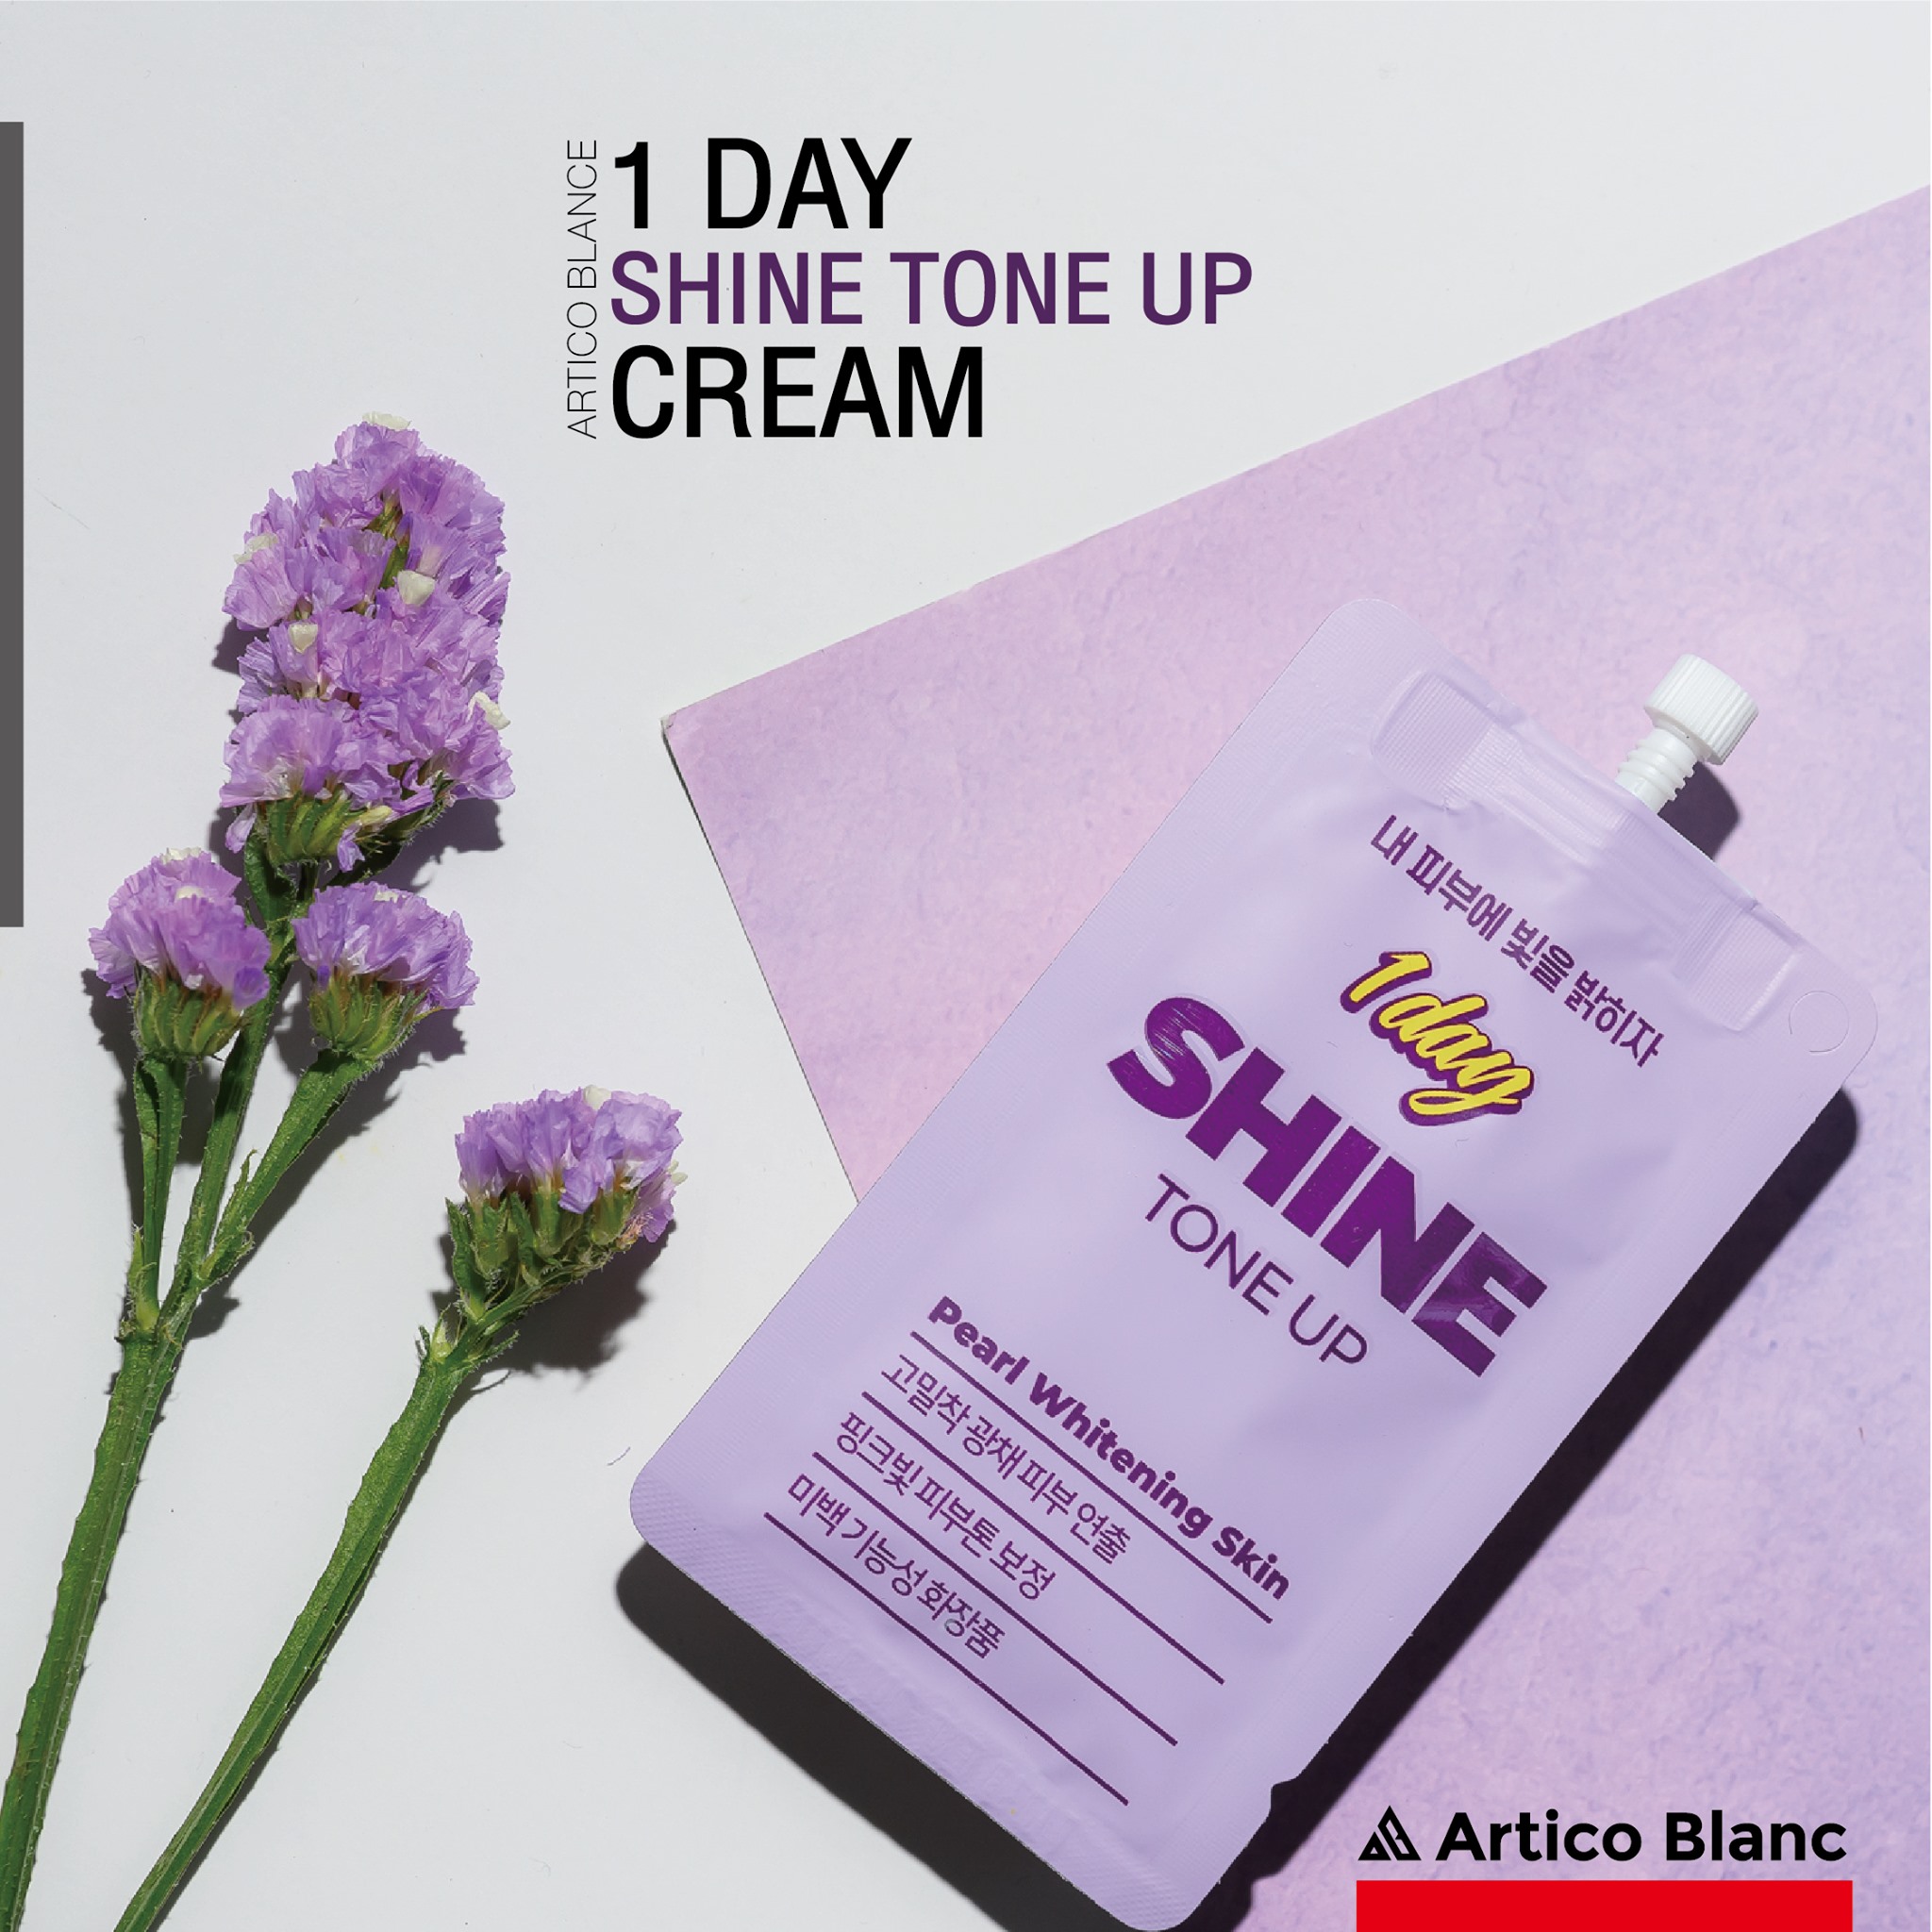 ARTICO BLANC 1 Day Shine Tone Up Cream ครีมโทนอัพบำรุงผิว พร้อมเป็นเมคอัพเบสอีกชั้น ให้ผิวกระจ่างใสอีกระดับ